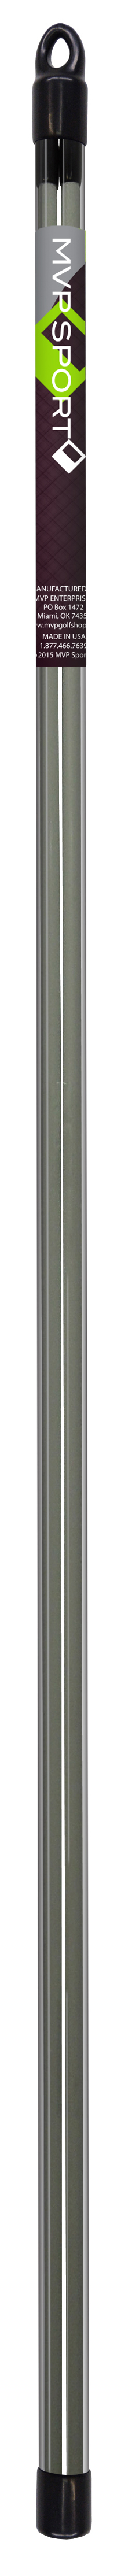 MVP Sport Golf Alignment Sticks (gray) - image 2 of 2